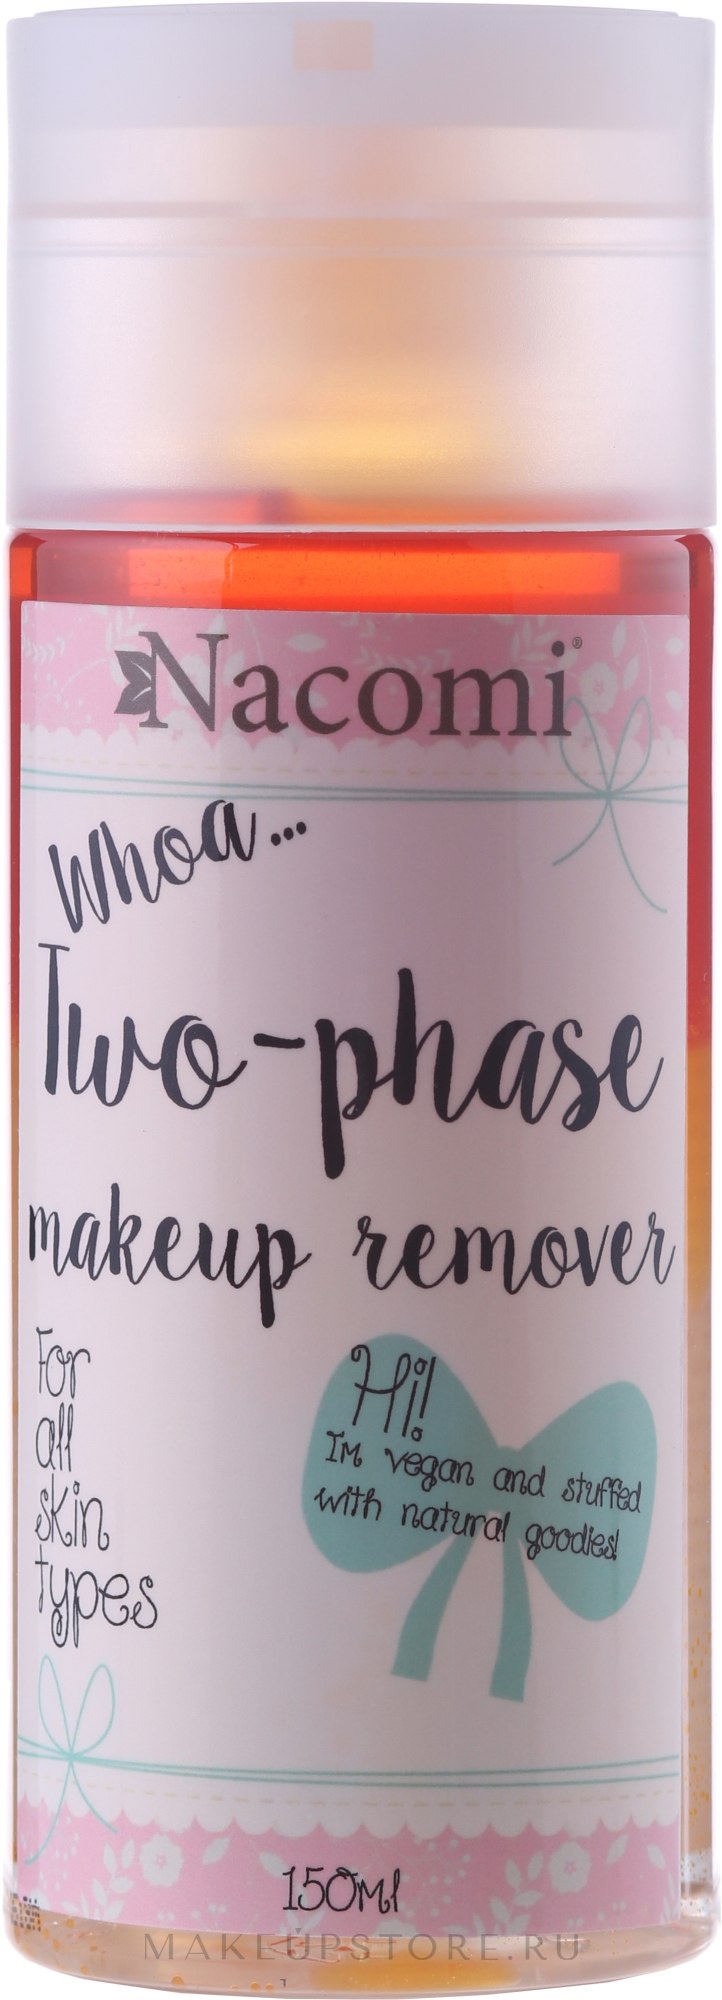 Средство для снятия макияжа Nacomi Two-phase makeup remover, 150 мл